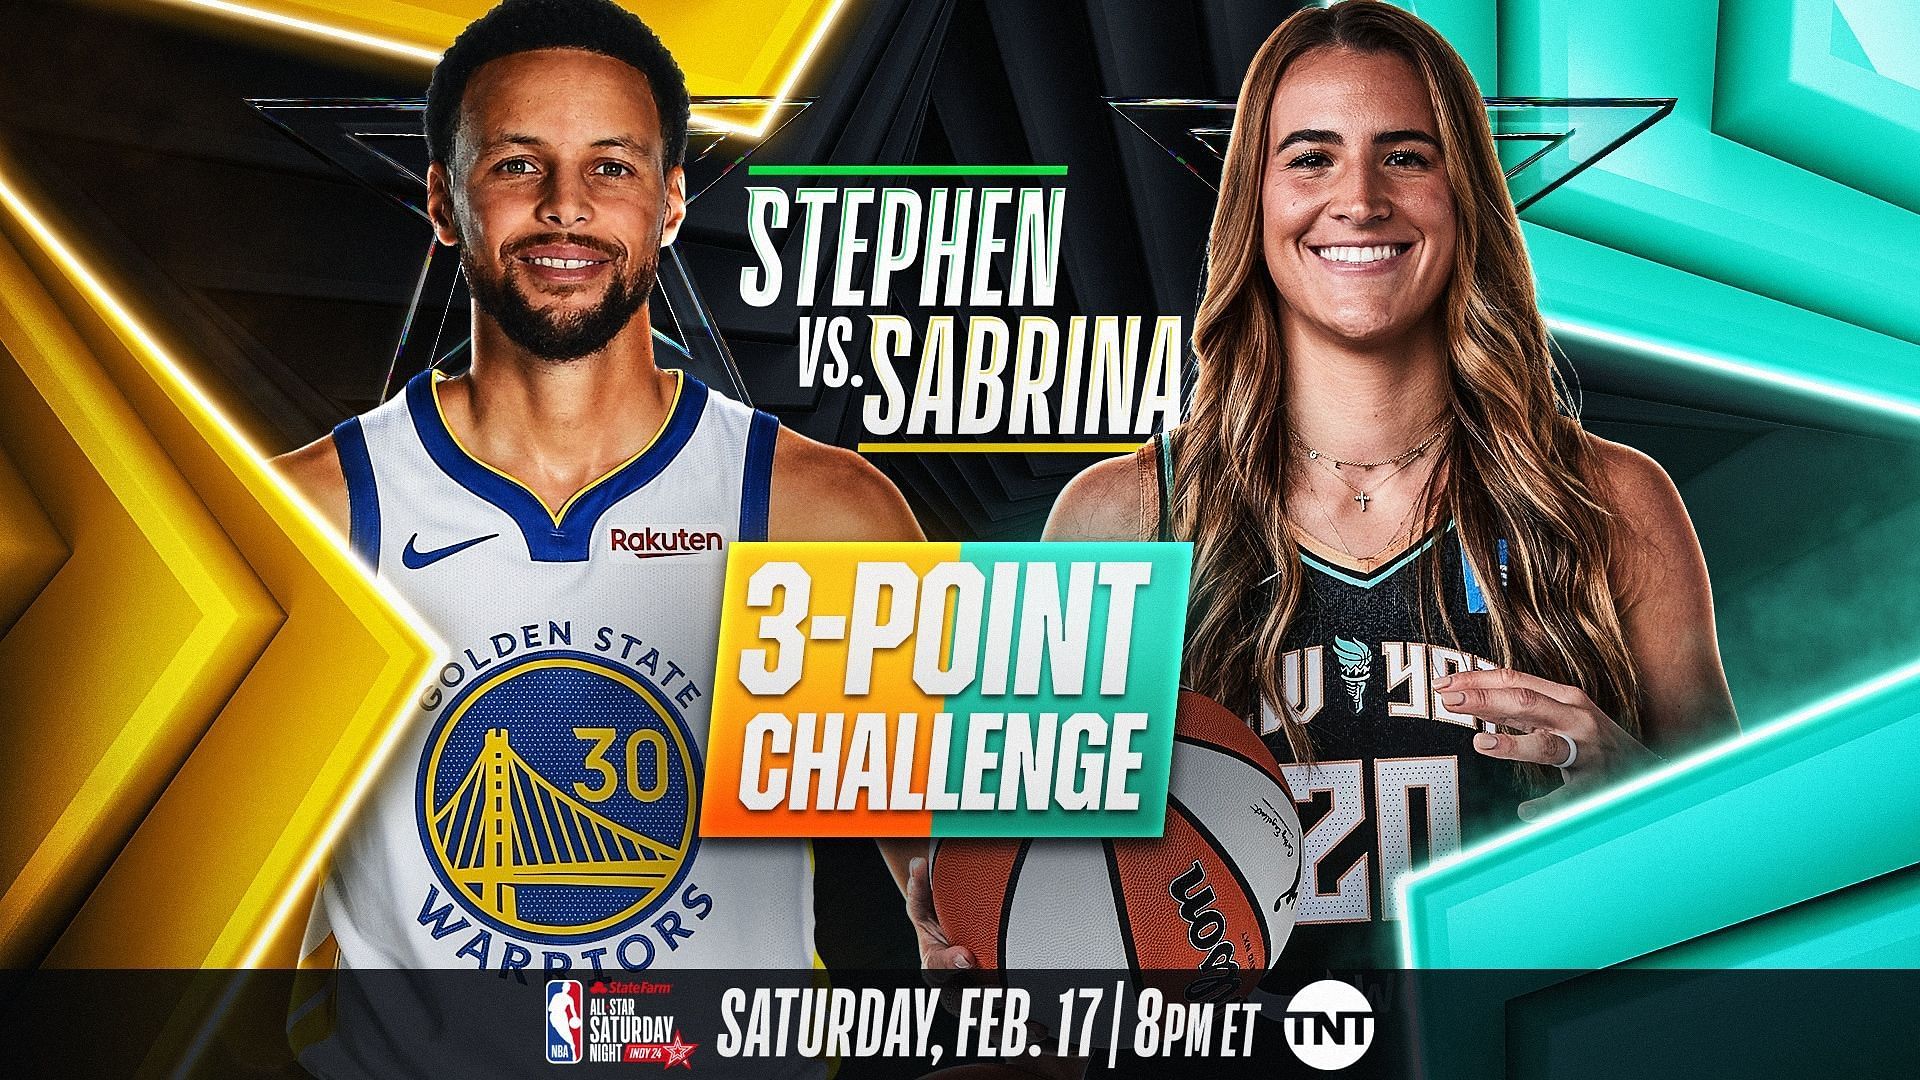 Stephen vs. Sabrina 3-Point Challenge: Scores, Result and Winner